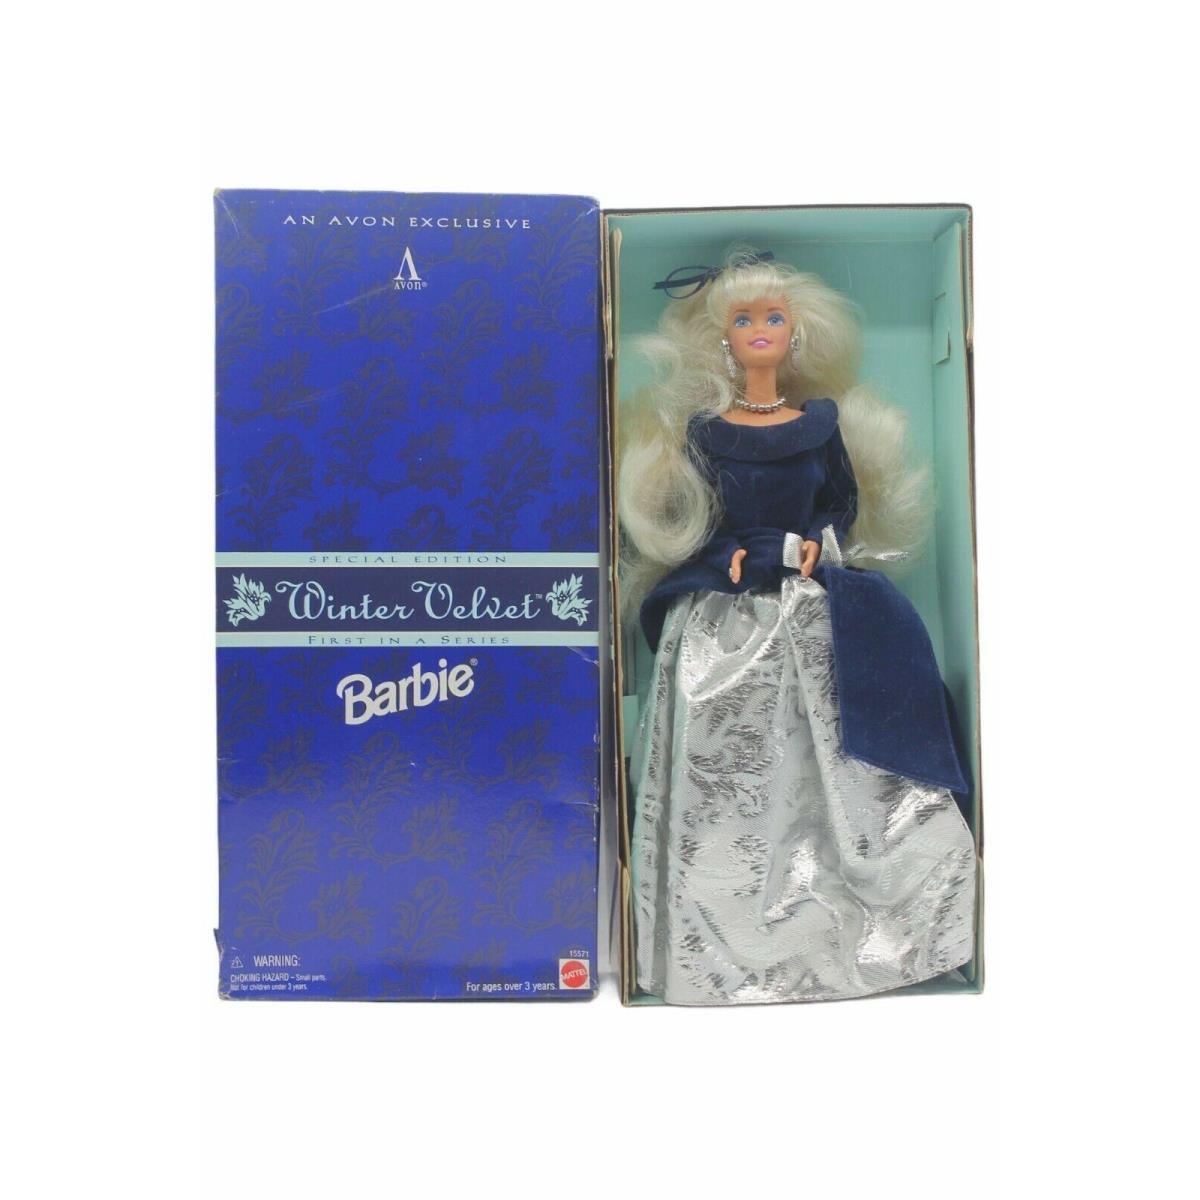 Barbie Winter Velvet Avon Special Edition Exclusive Mattel 1995 15571 Boxed